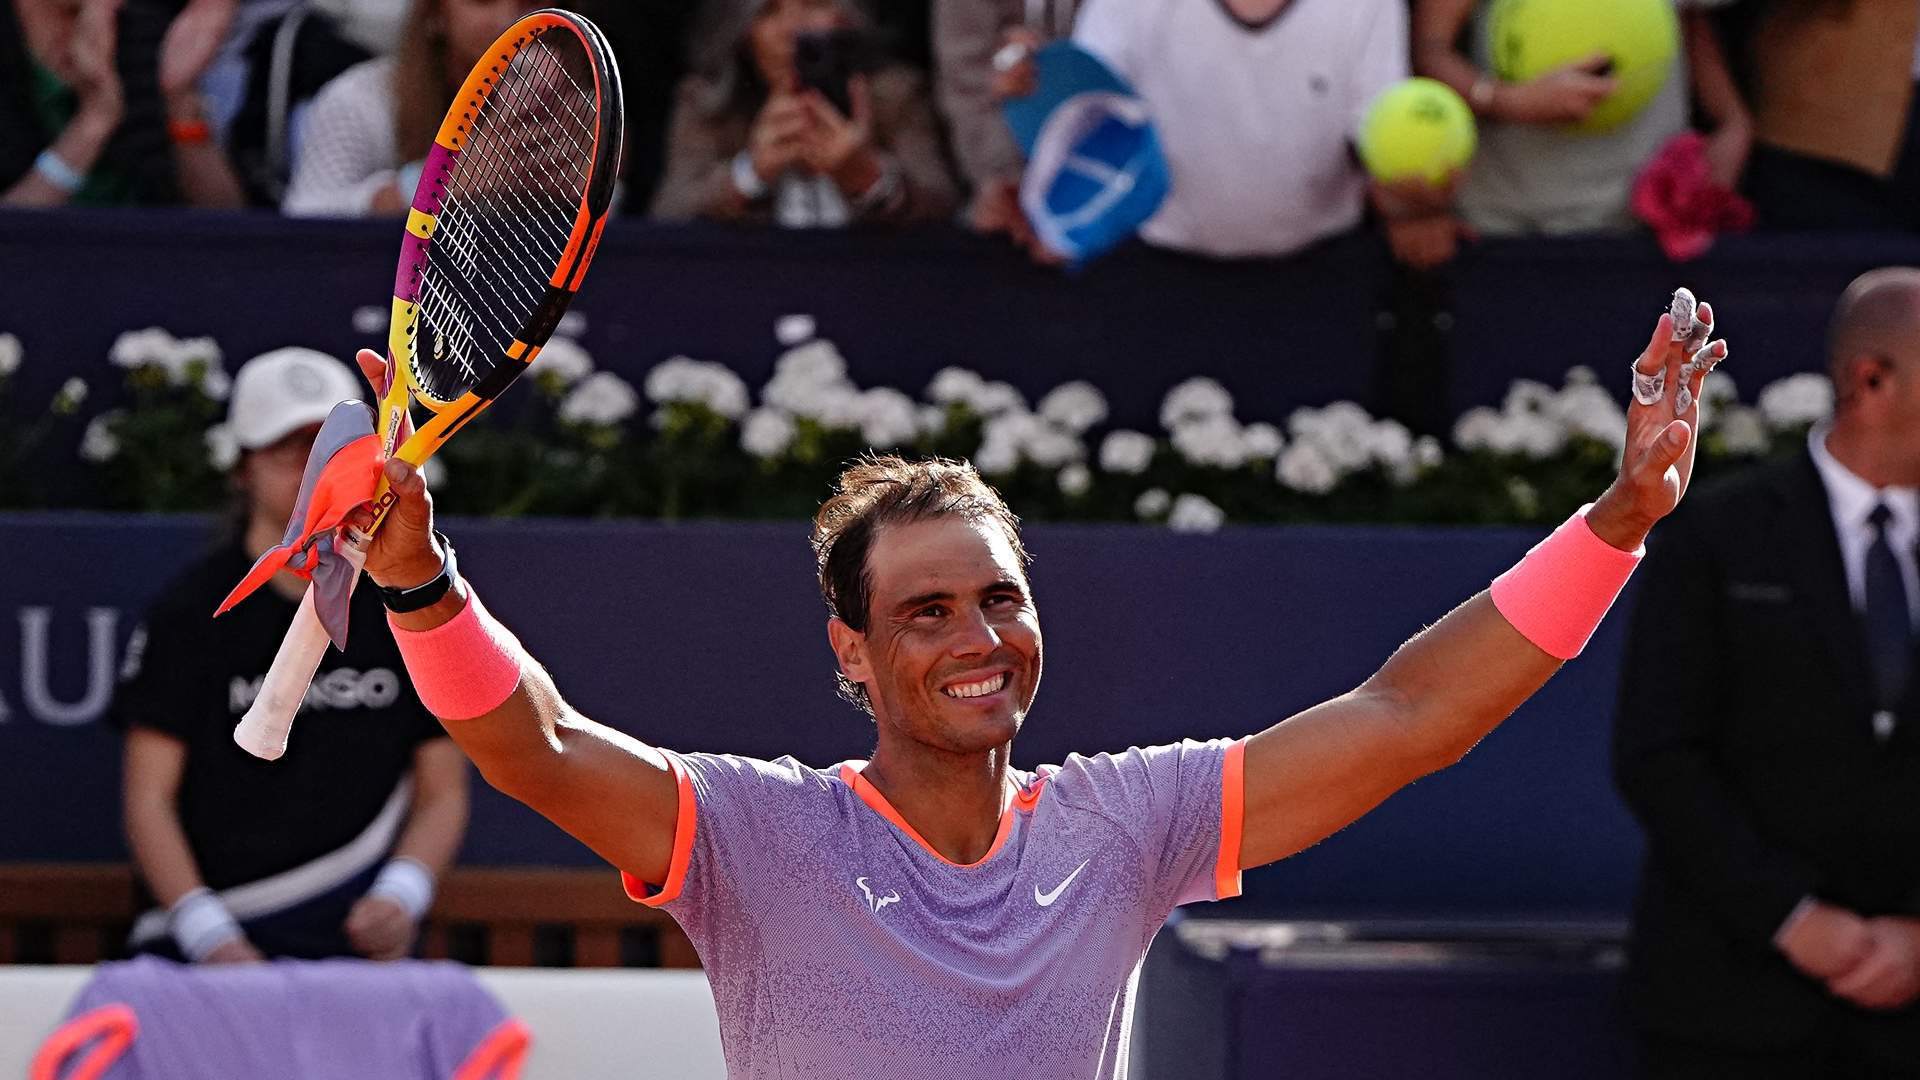 Tennis, ATP, Rafael Nadal, Comeback, Barcelona